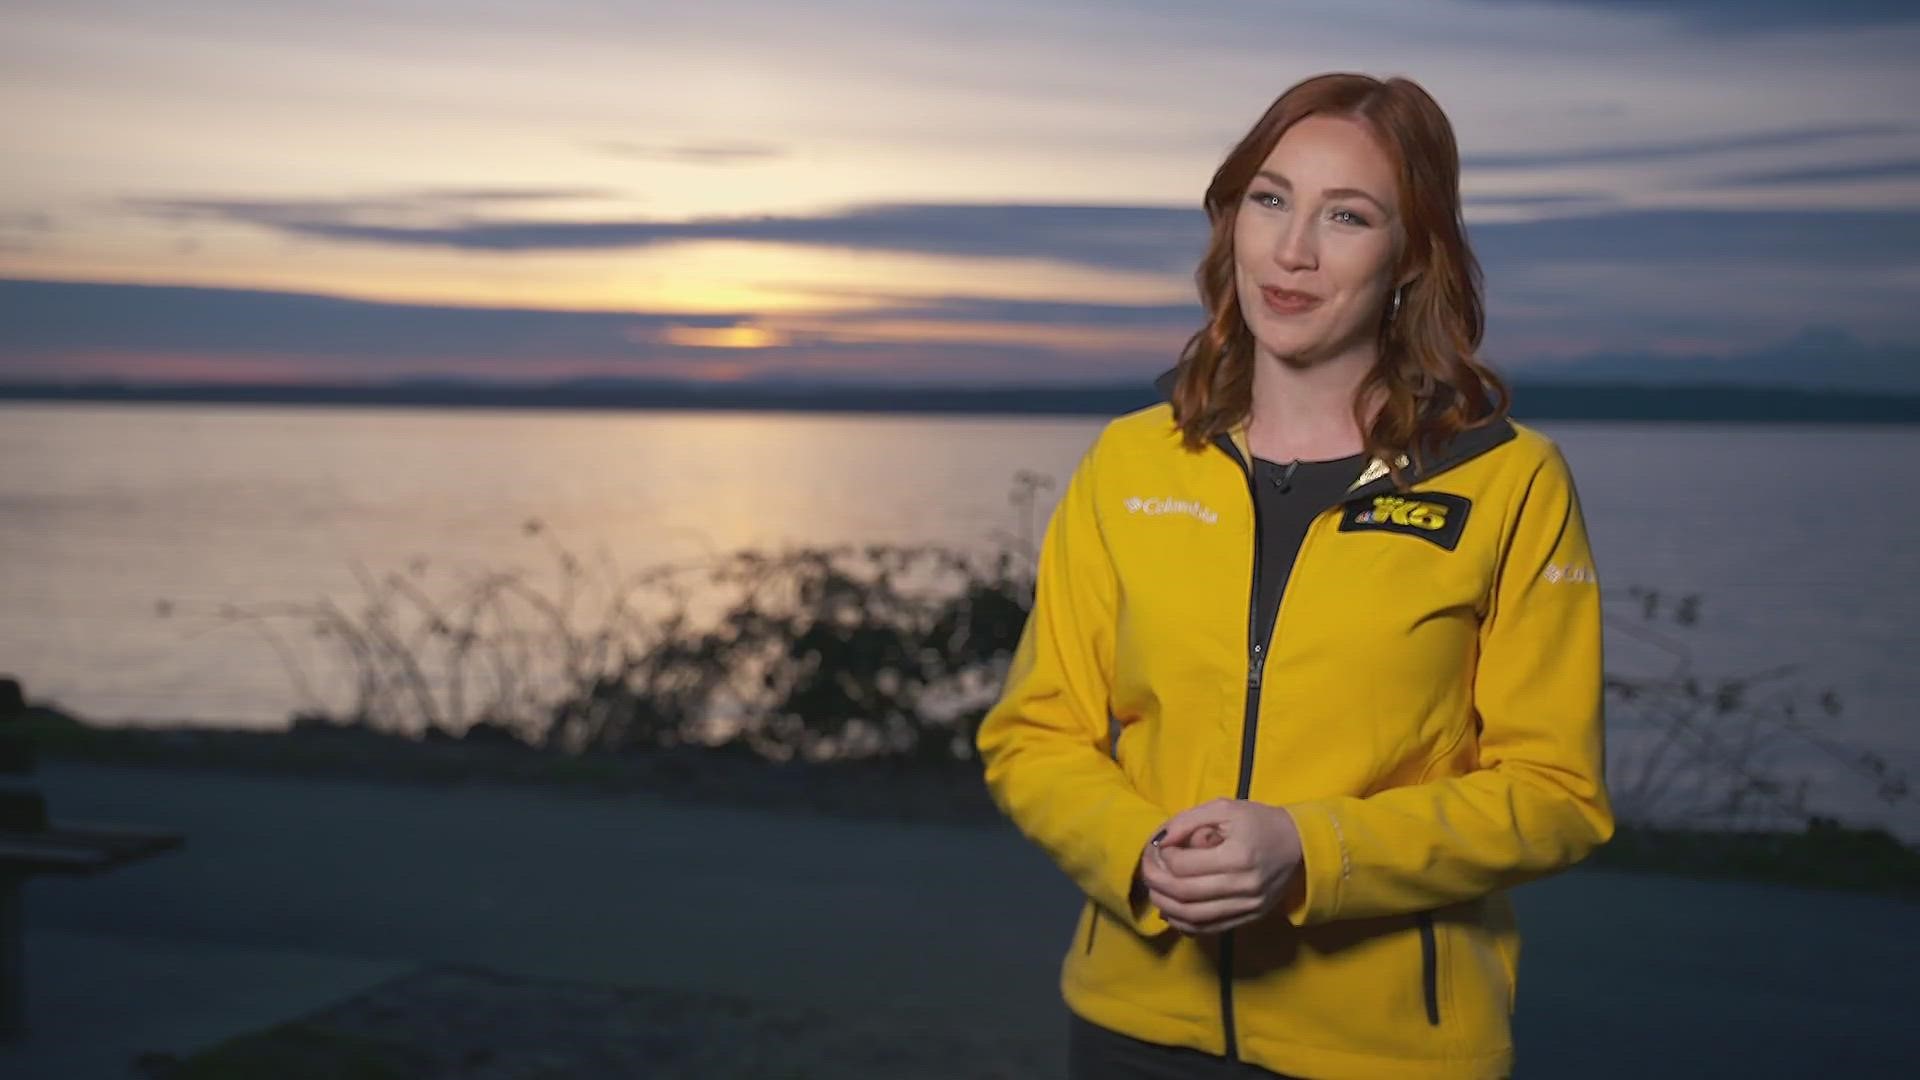 KING 5 Meteorologist Leah Pezzetti explains the science behind a beautiful Washington sunset